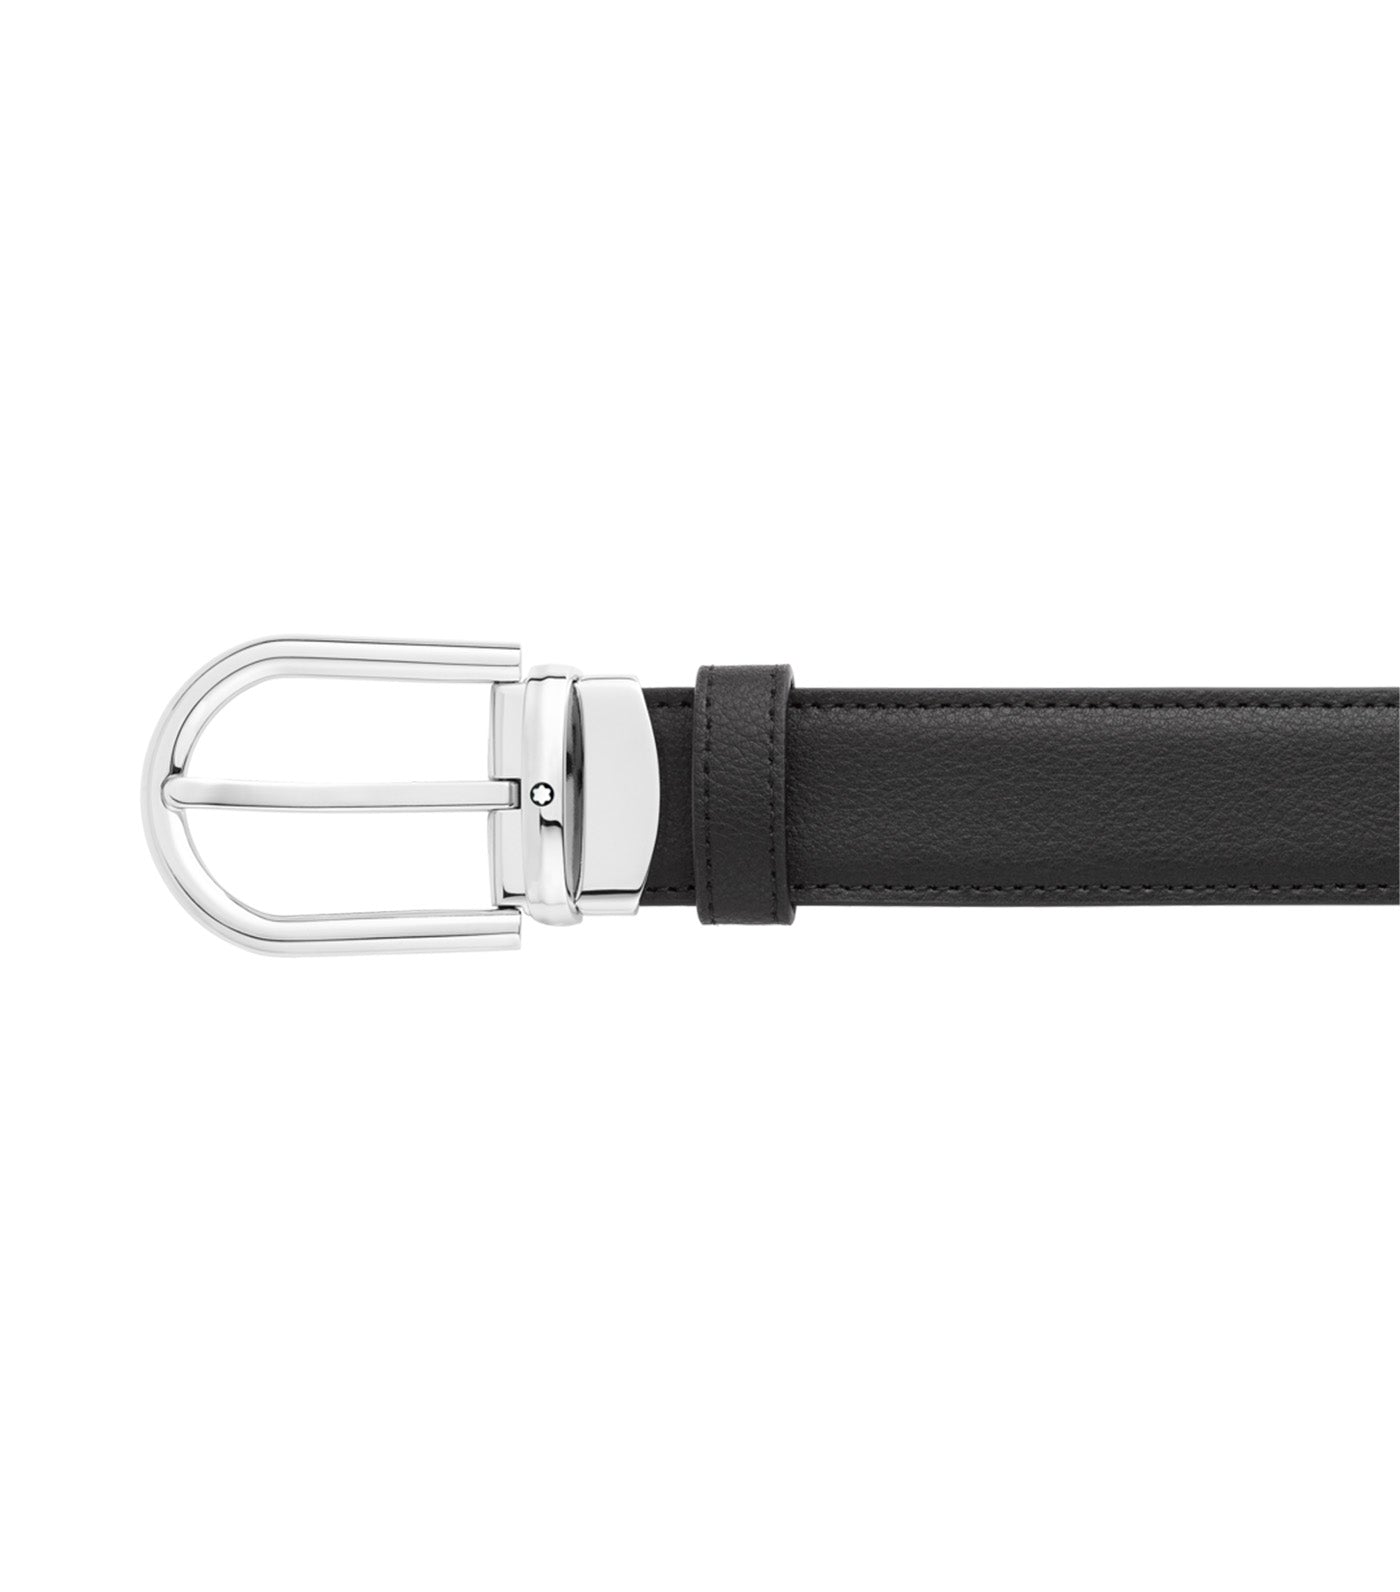 Horseshoe Buckle 30mm Reversible Leather Belt Black/Brown